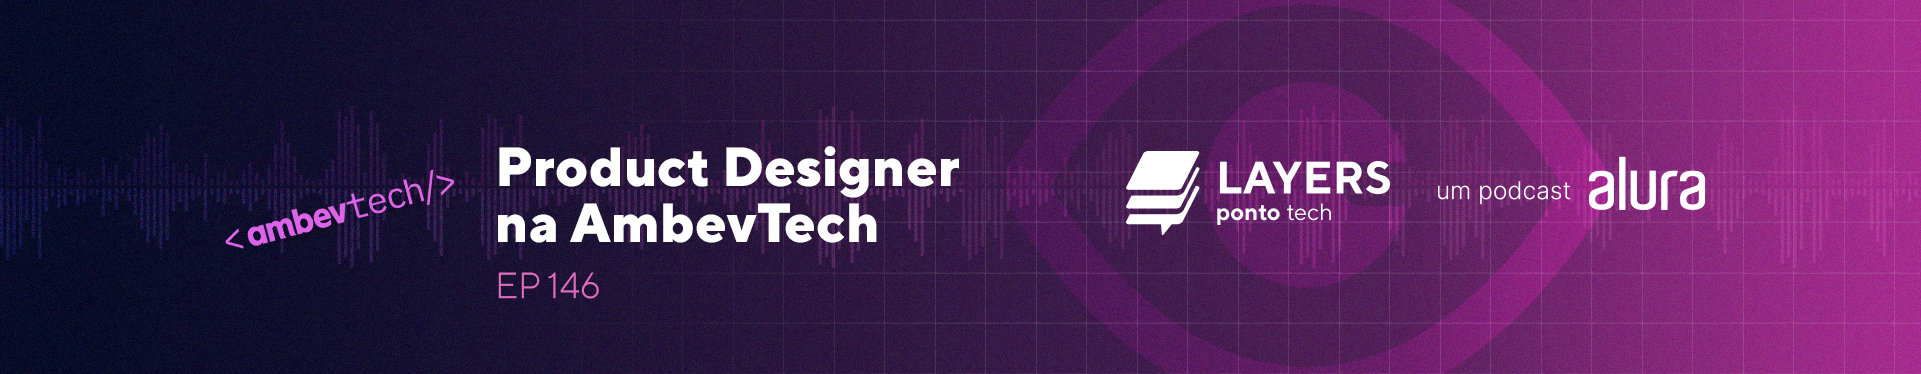 layerspontotech_146-productDesigner-AmbevTech_banner